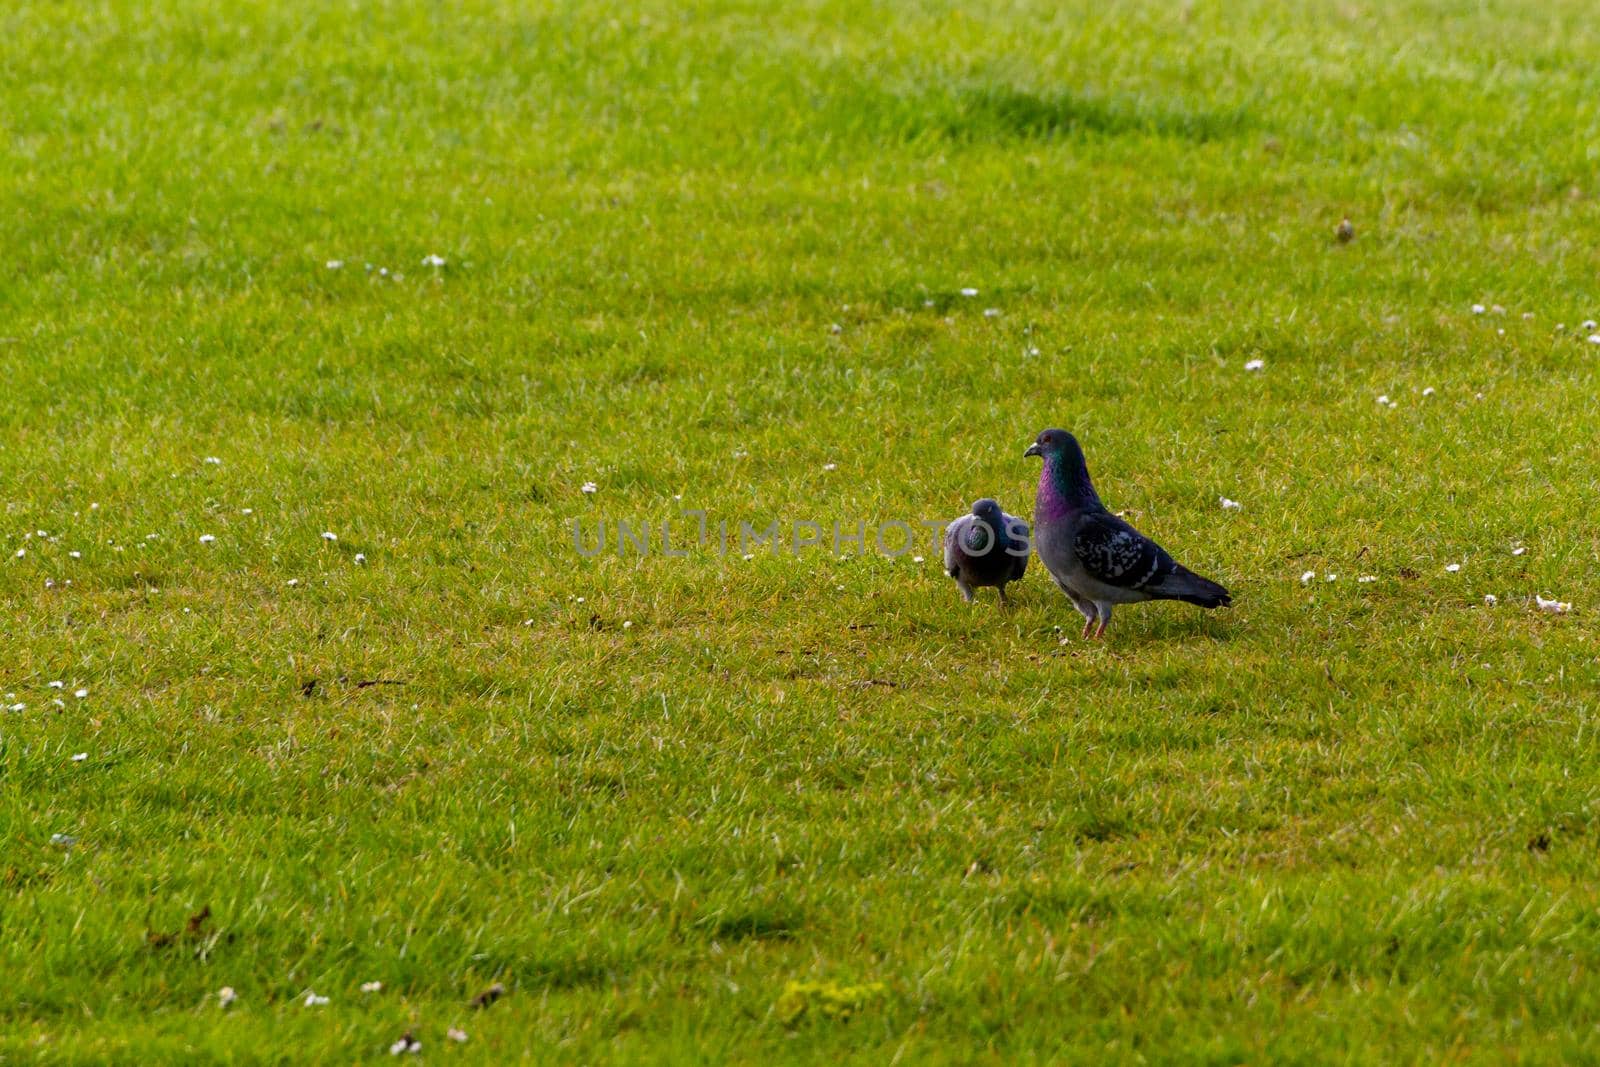 Two Pigeons Walking In a Lawn by AlbertoPascual